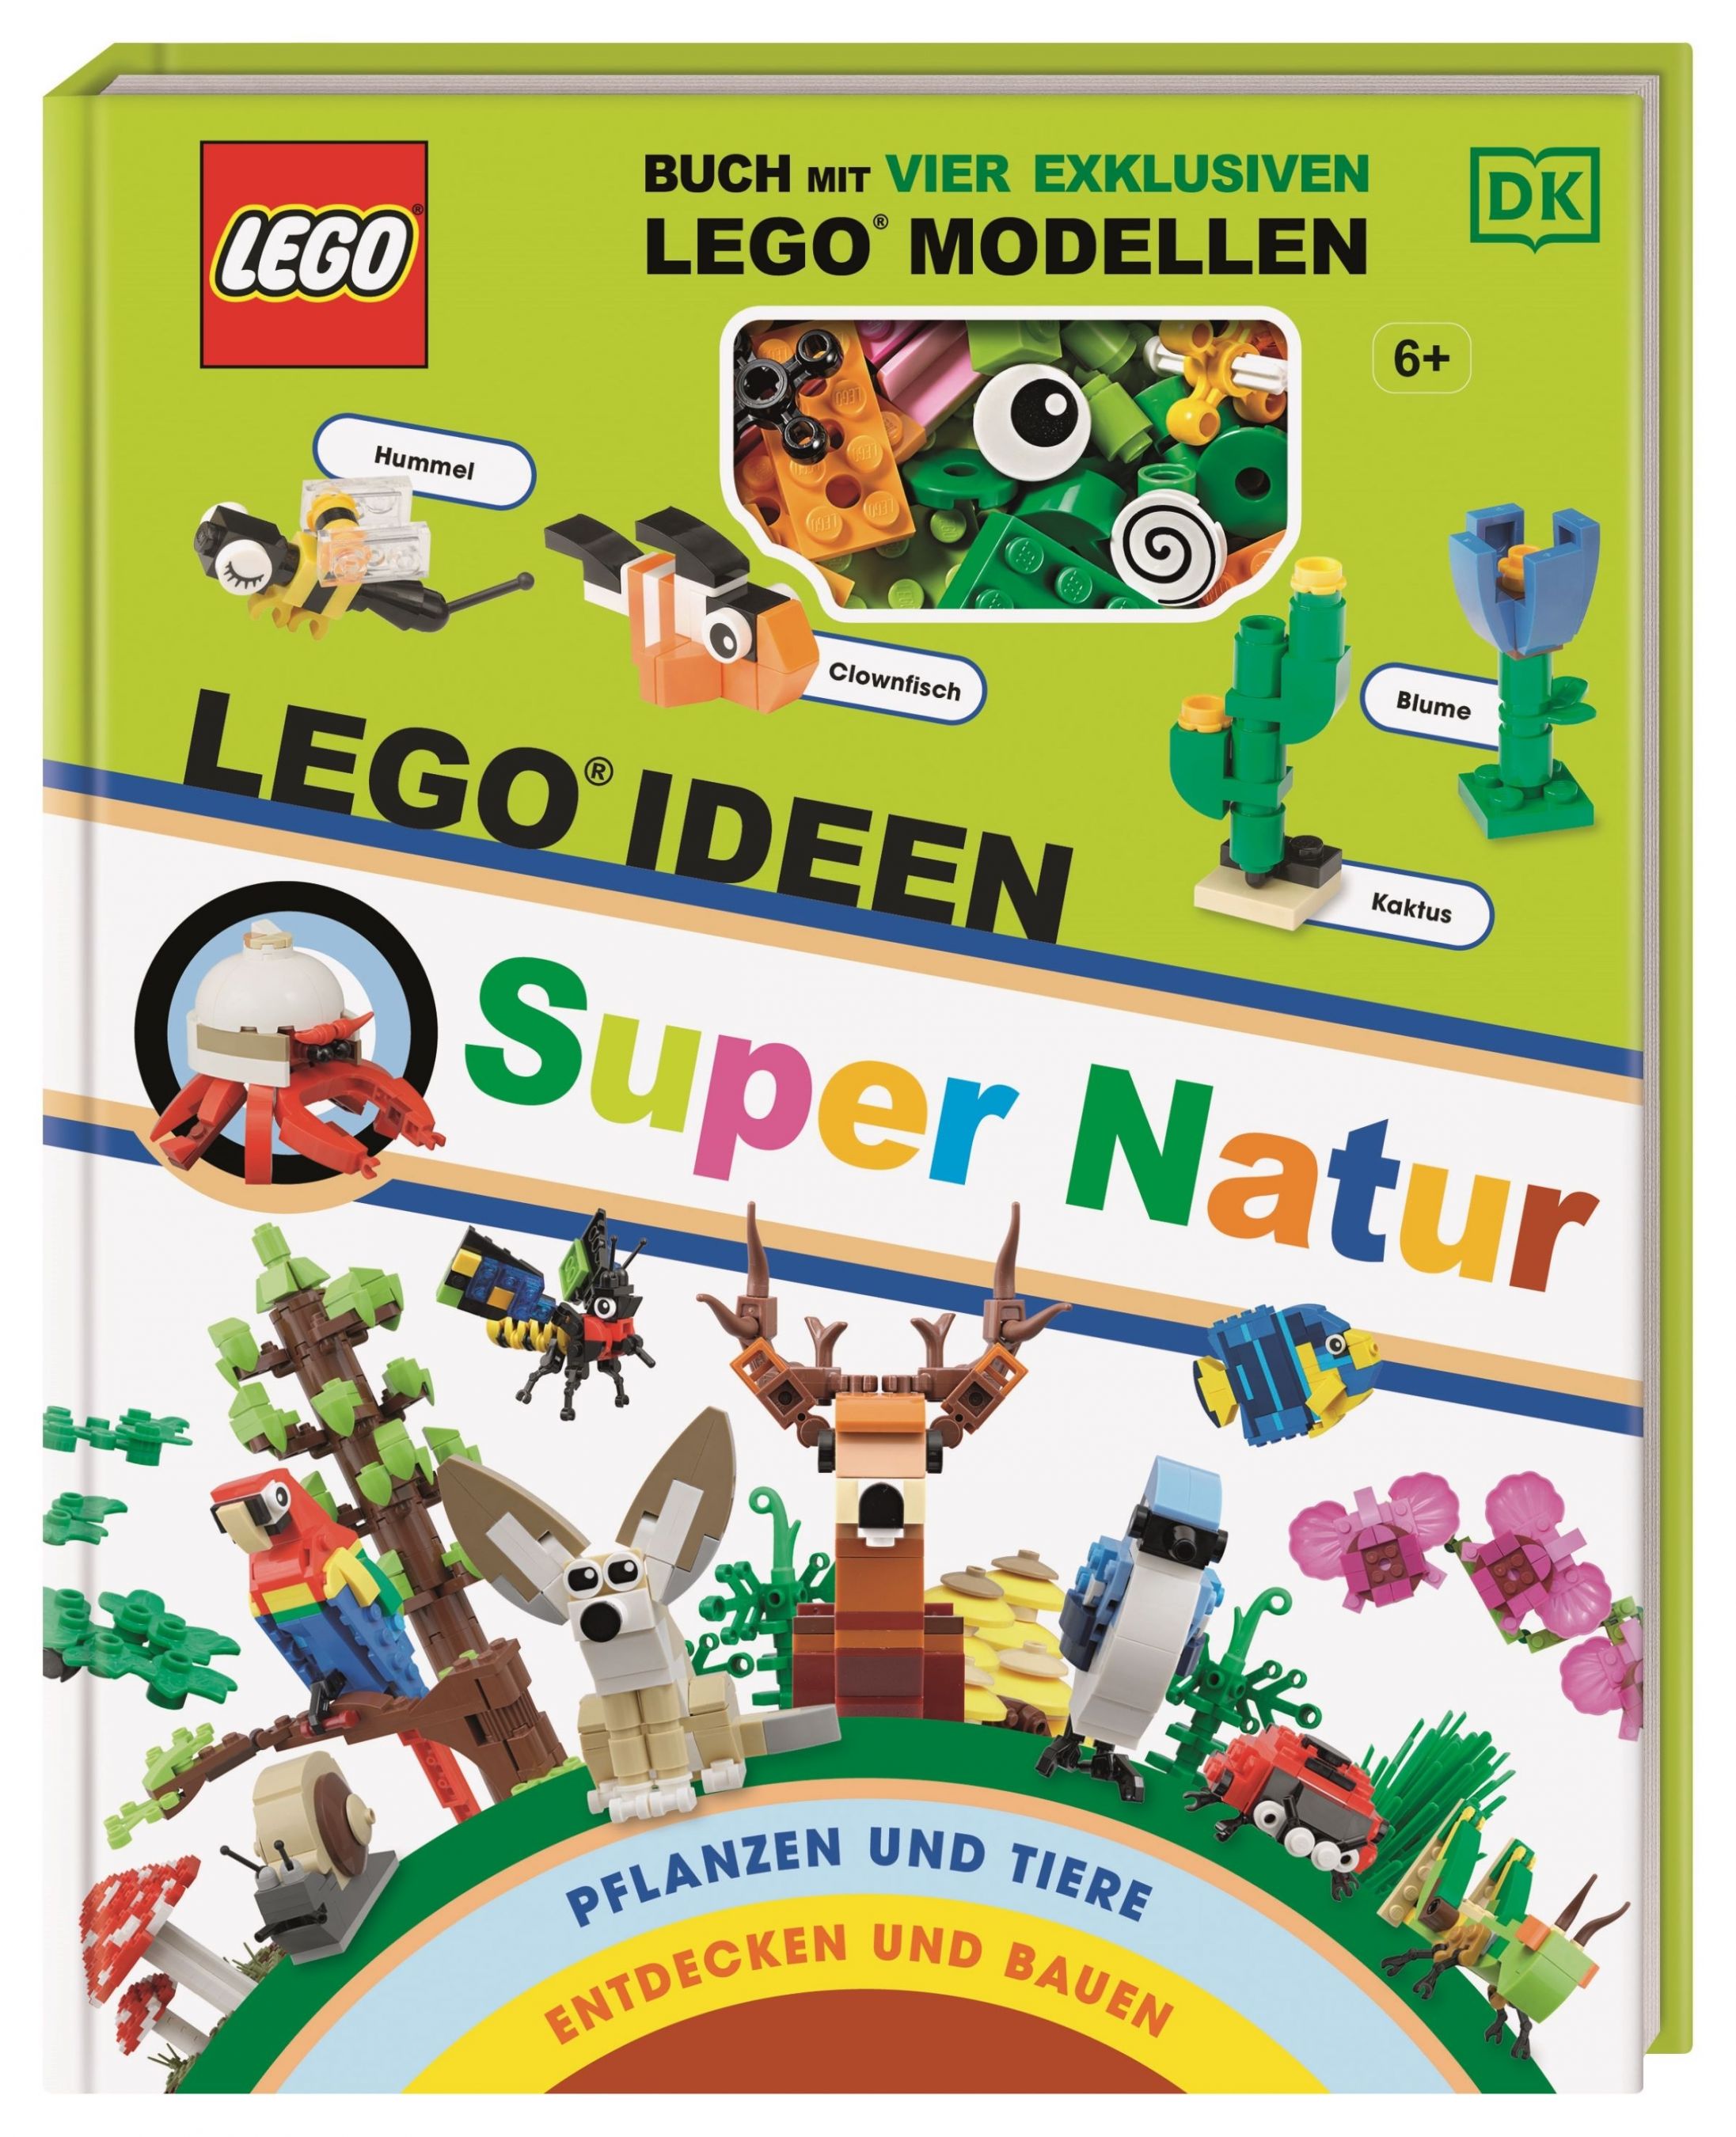 LEGO Buch 5007394 LEGO® Ideen Super Natur